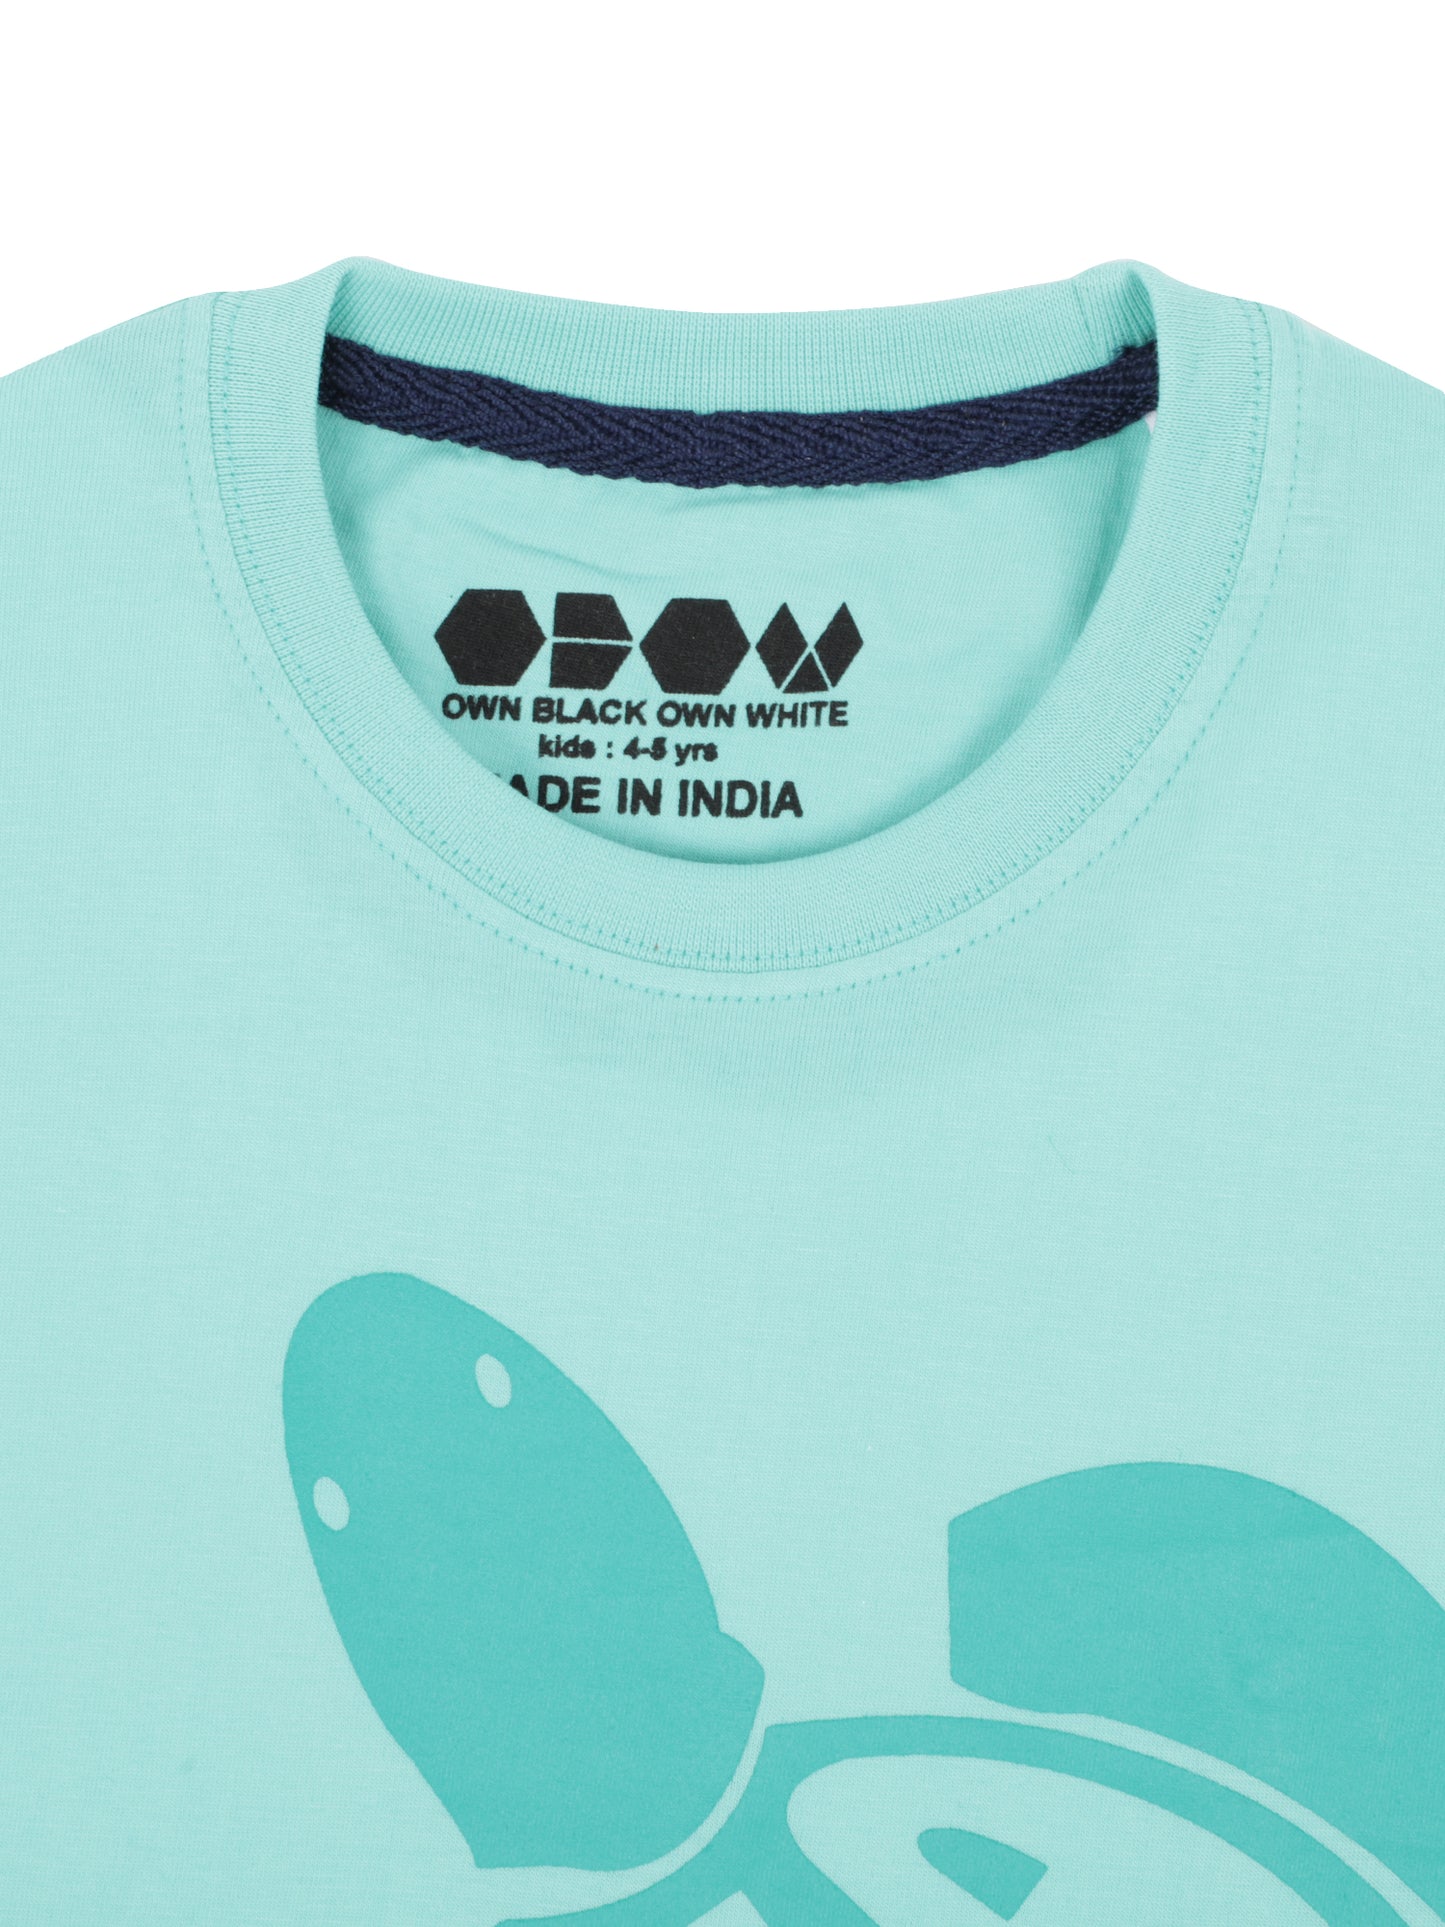 Kids Printed round neck sea turtle t-shirt